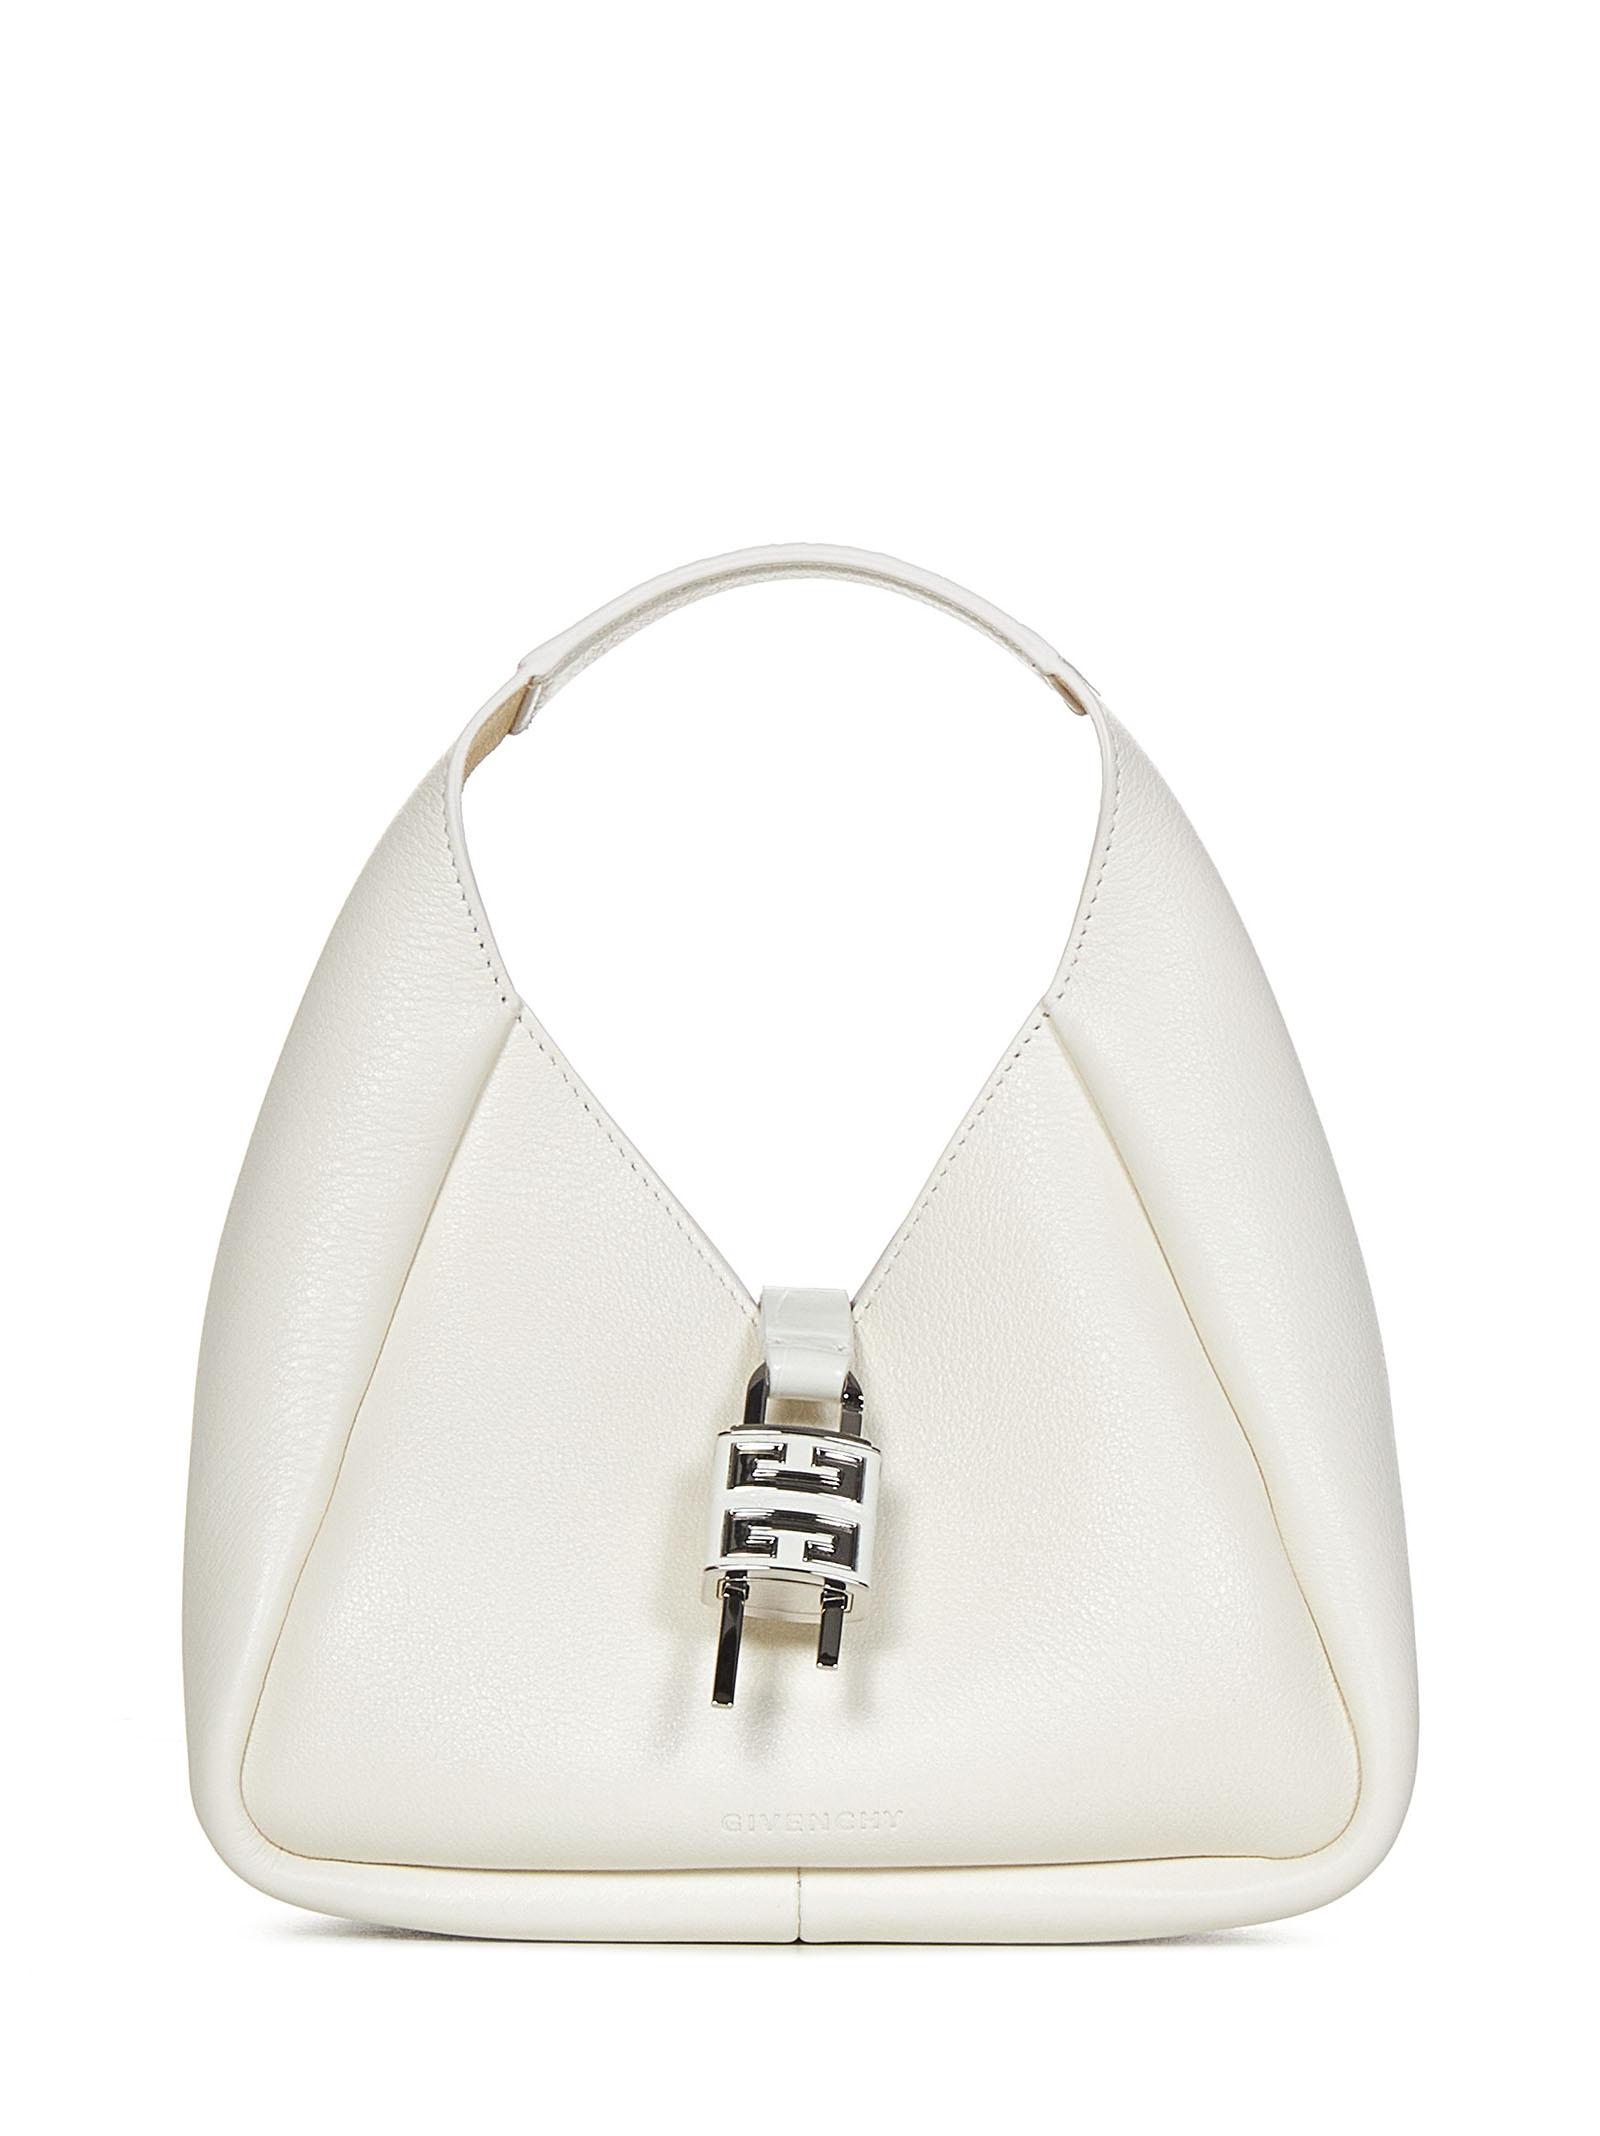 Givenchy G-hobo Handbag in White | Lyst